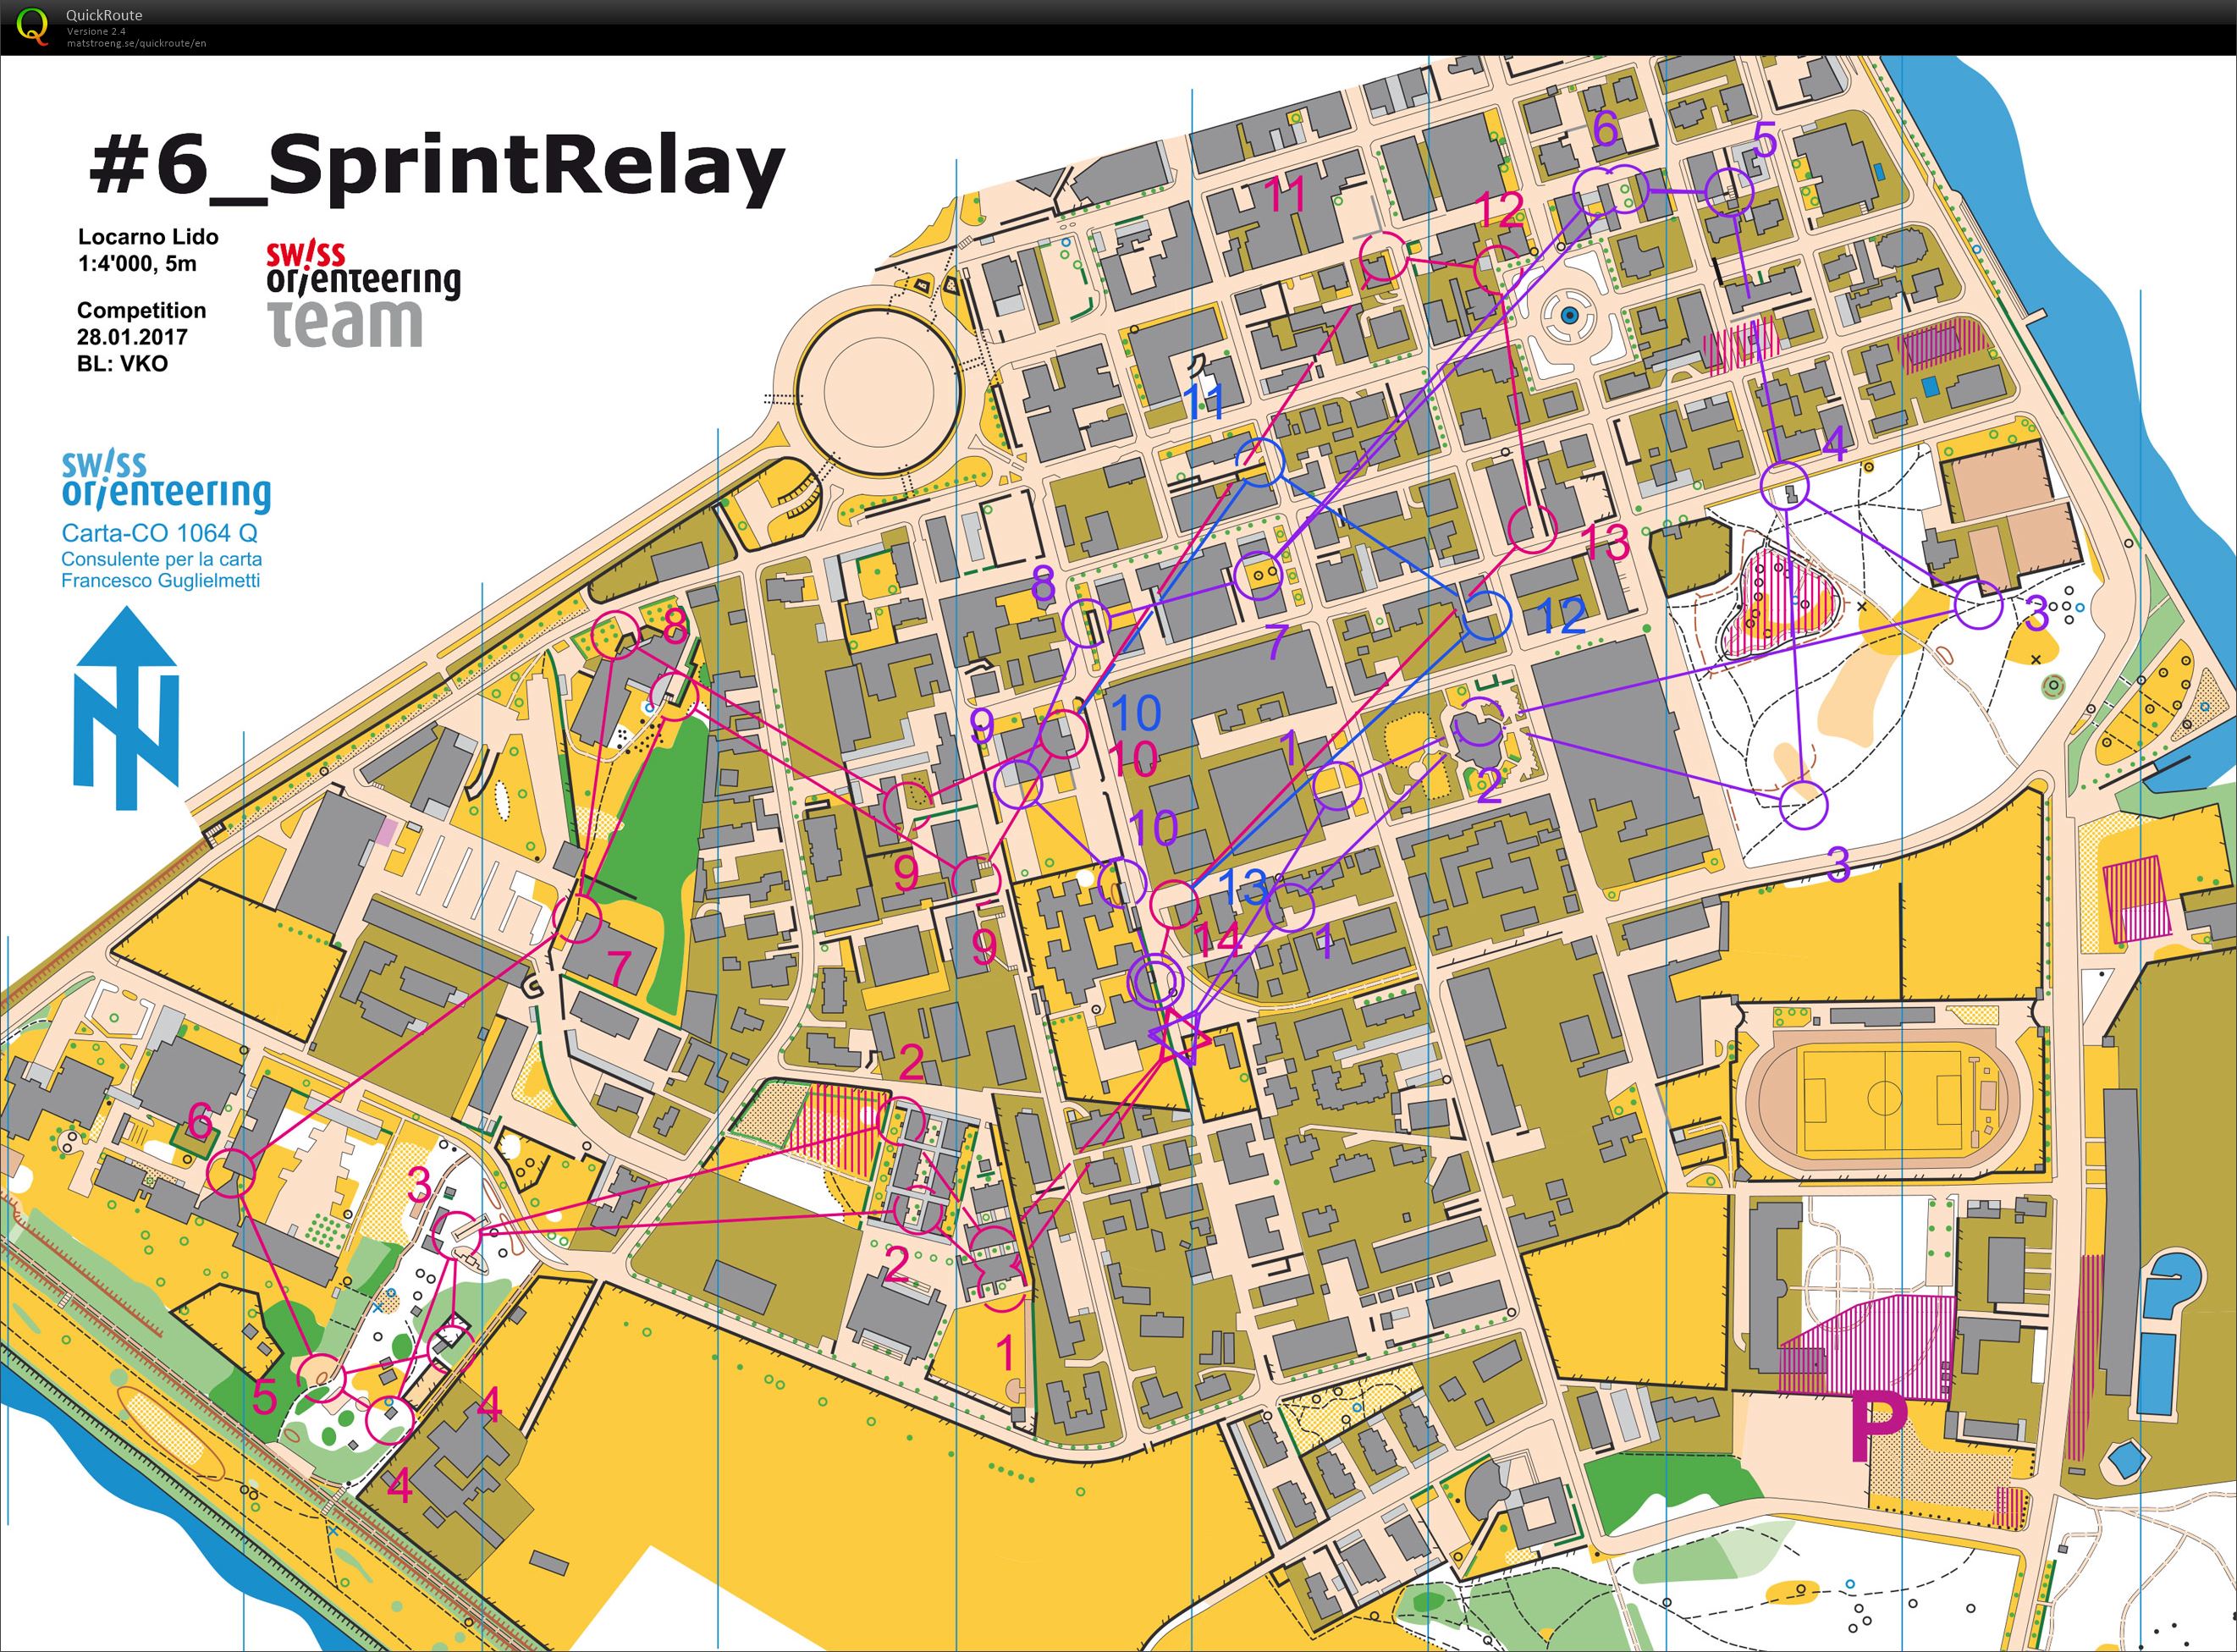 Sprint relay *chase start" (28.01.2017)